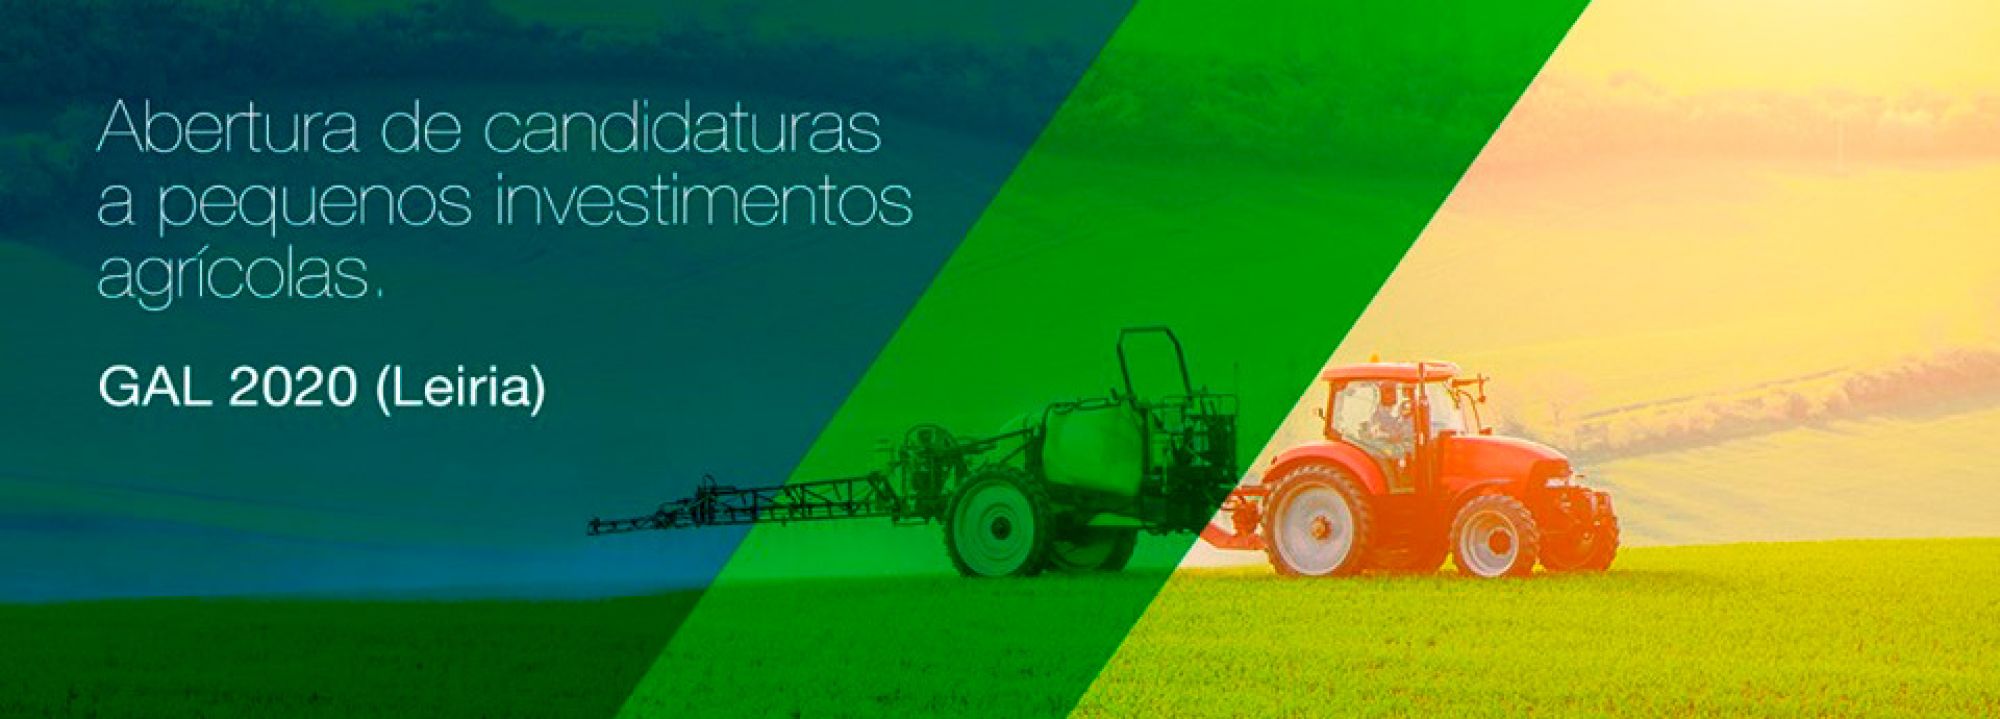 ABERTURA DE CANDIDATURAS A PEQUENOS INVESTIMENTOS AGRÍCOLAS – GAL 2020 (Leiria)